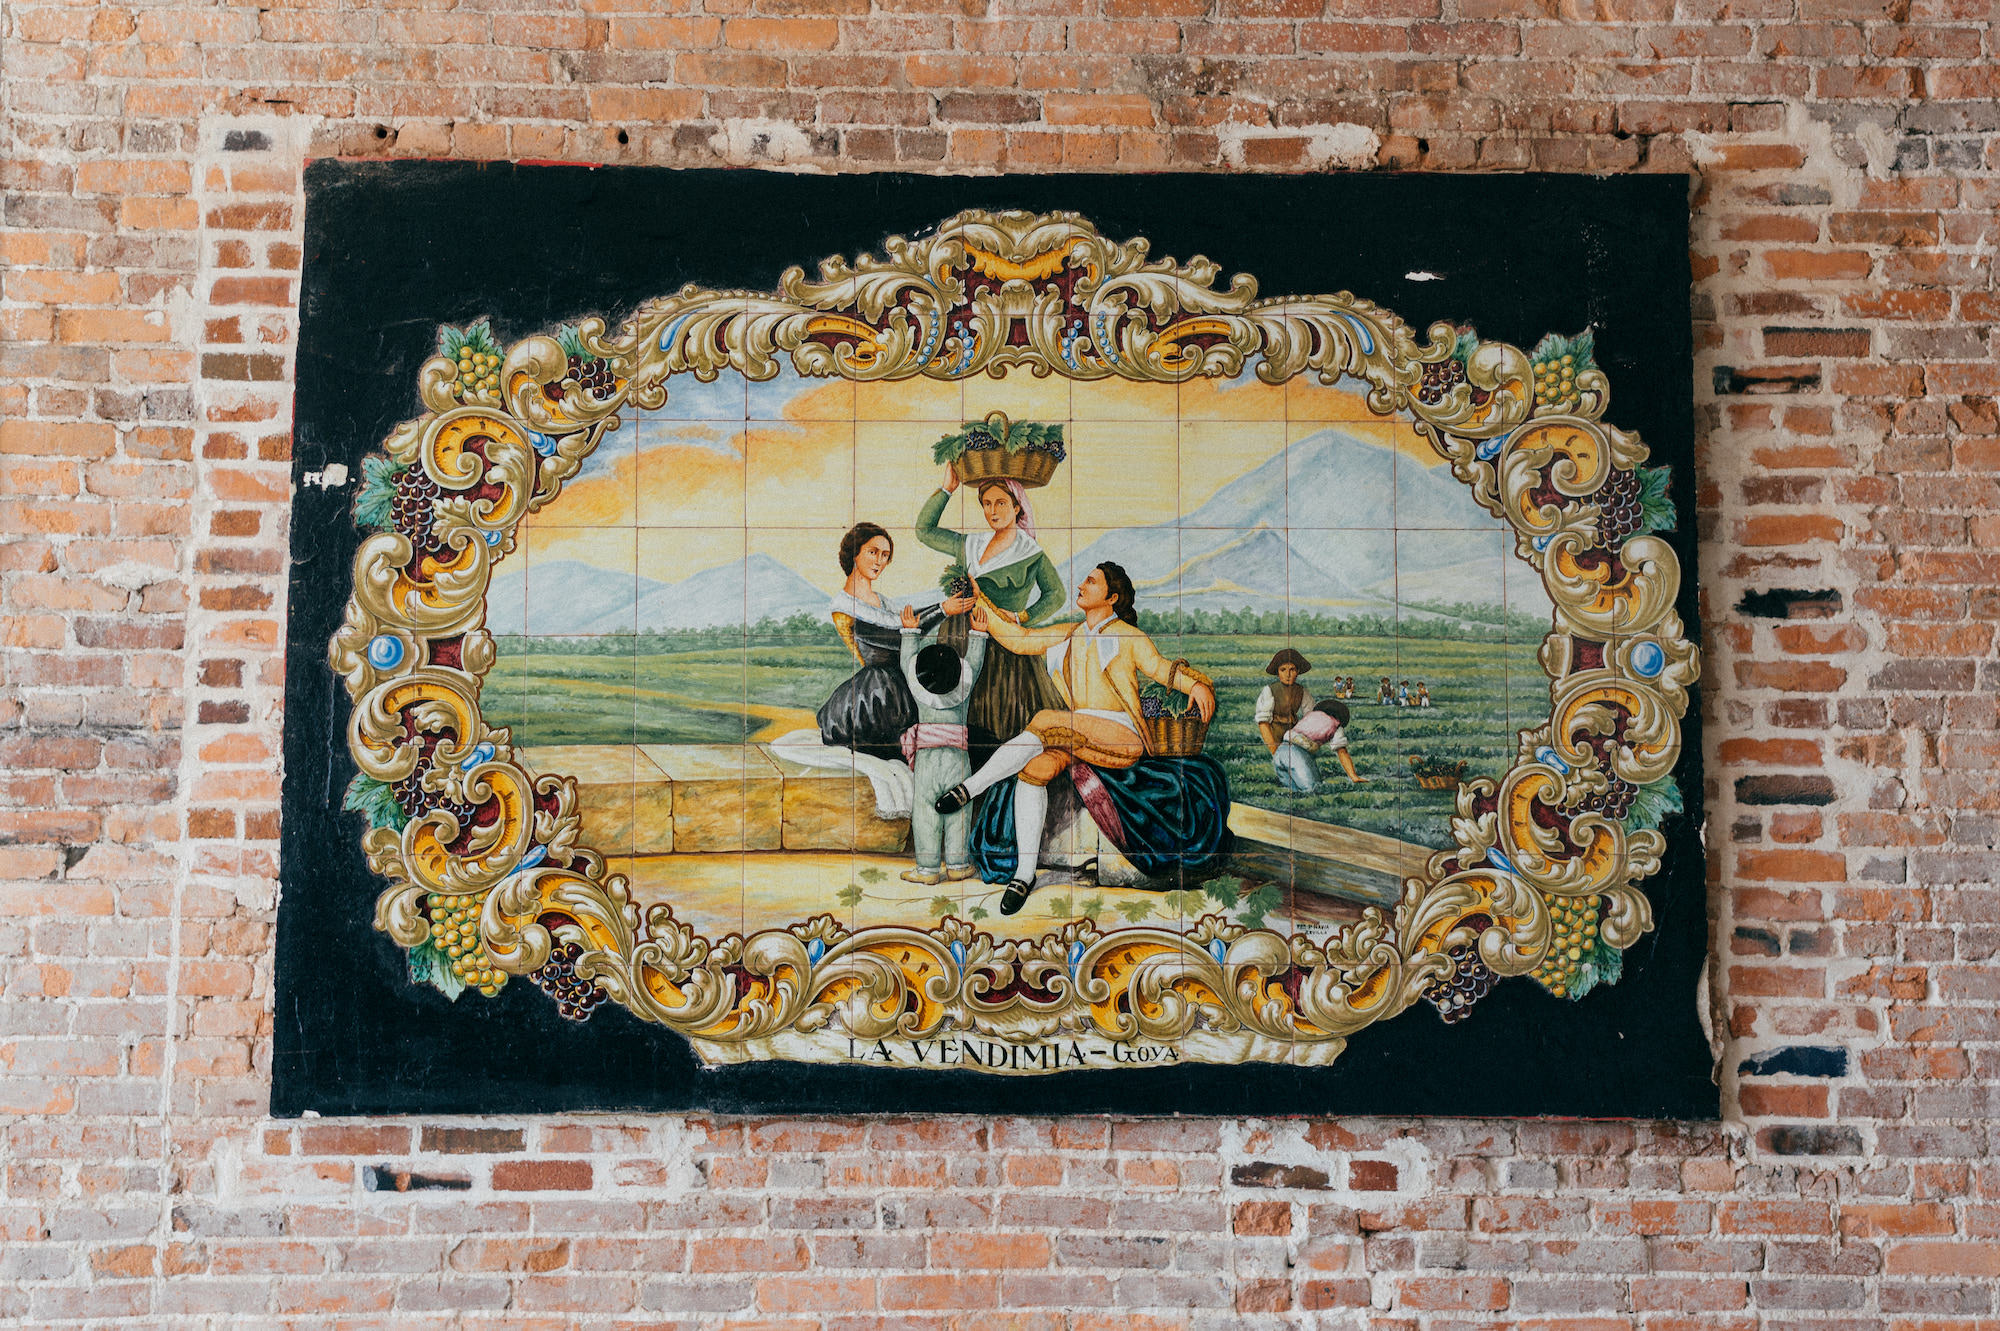 Historic La Vendimia Brick Wall Portrait Inside Ybor City Wedding Venue Hotel Haya